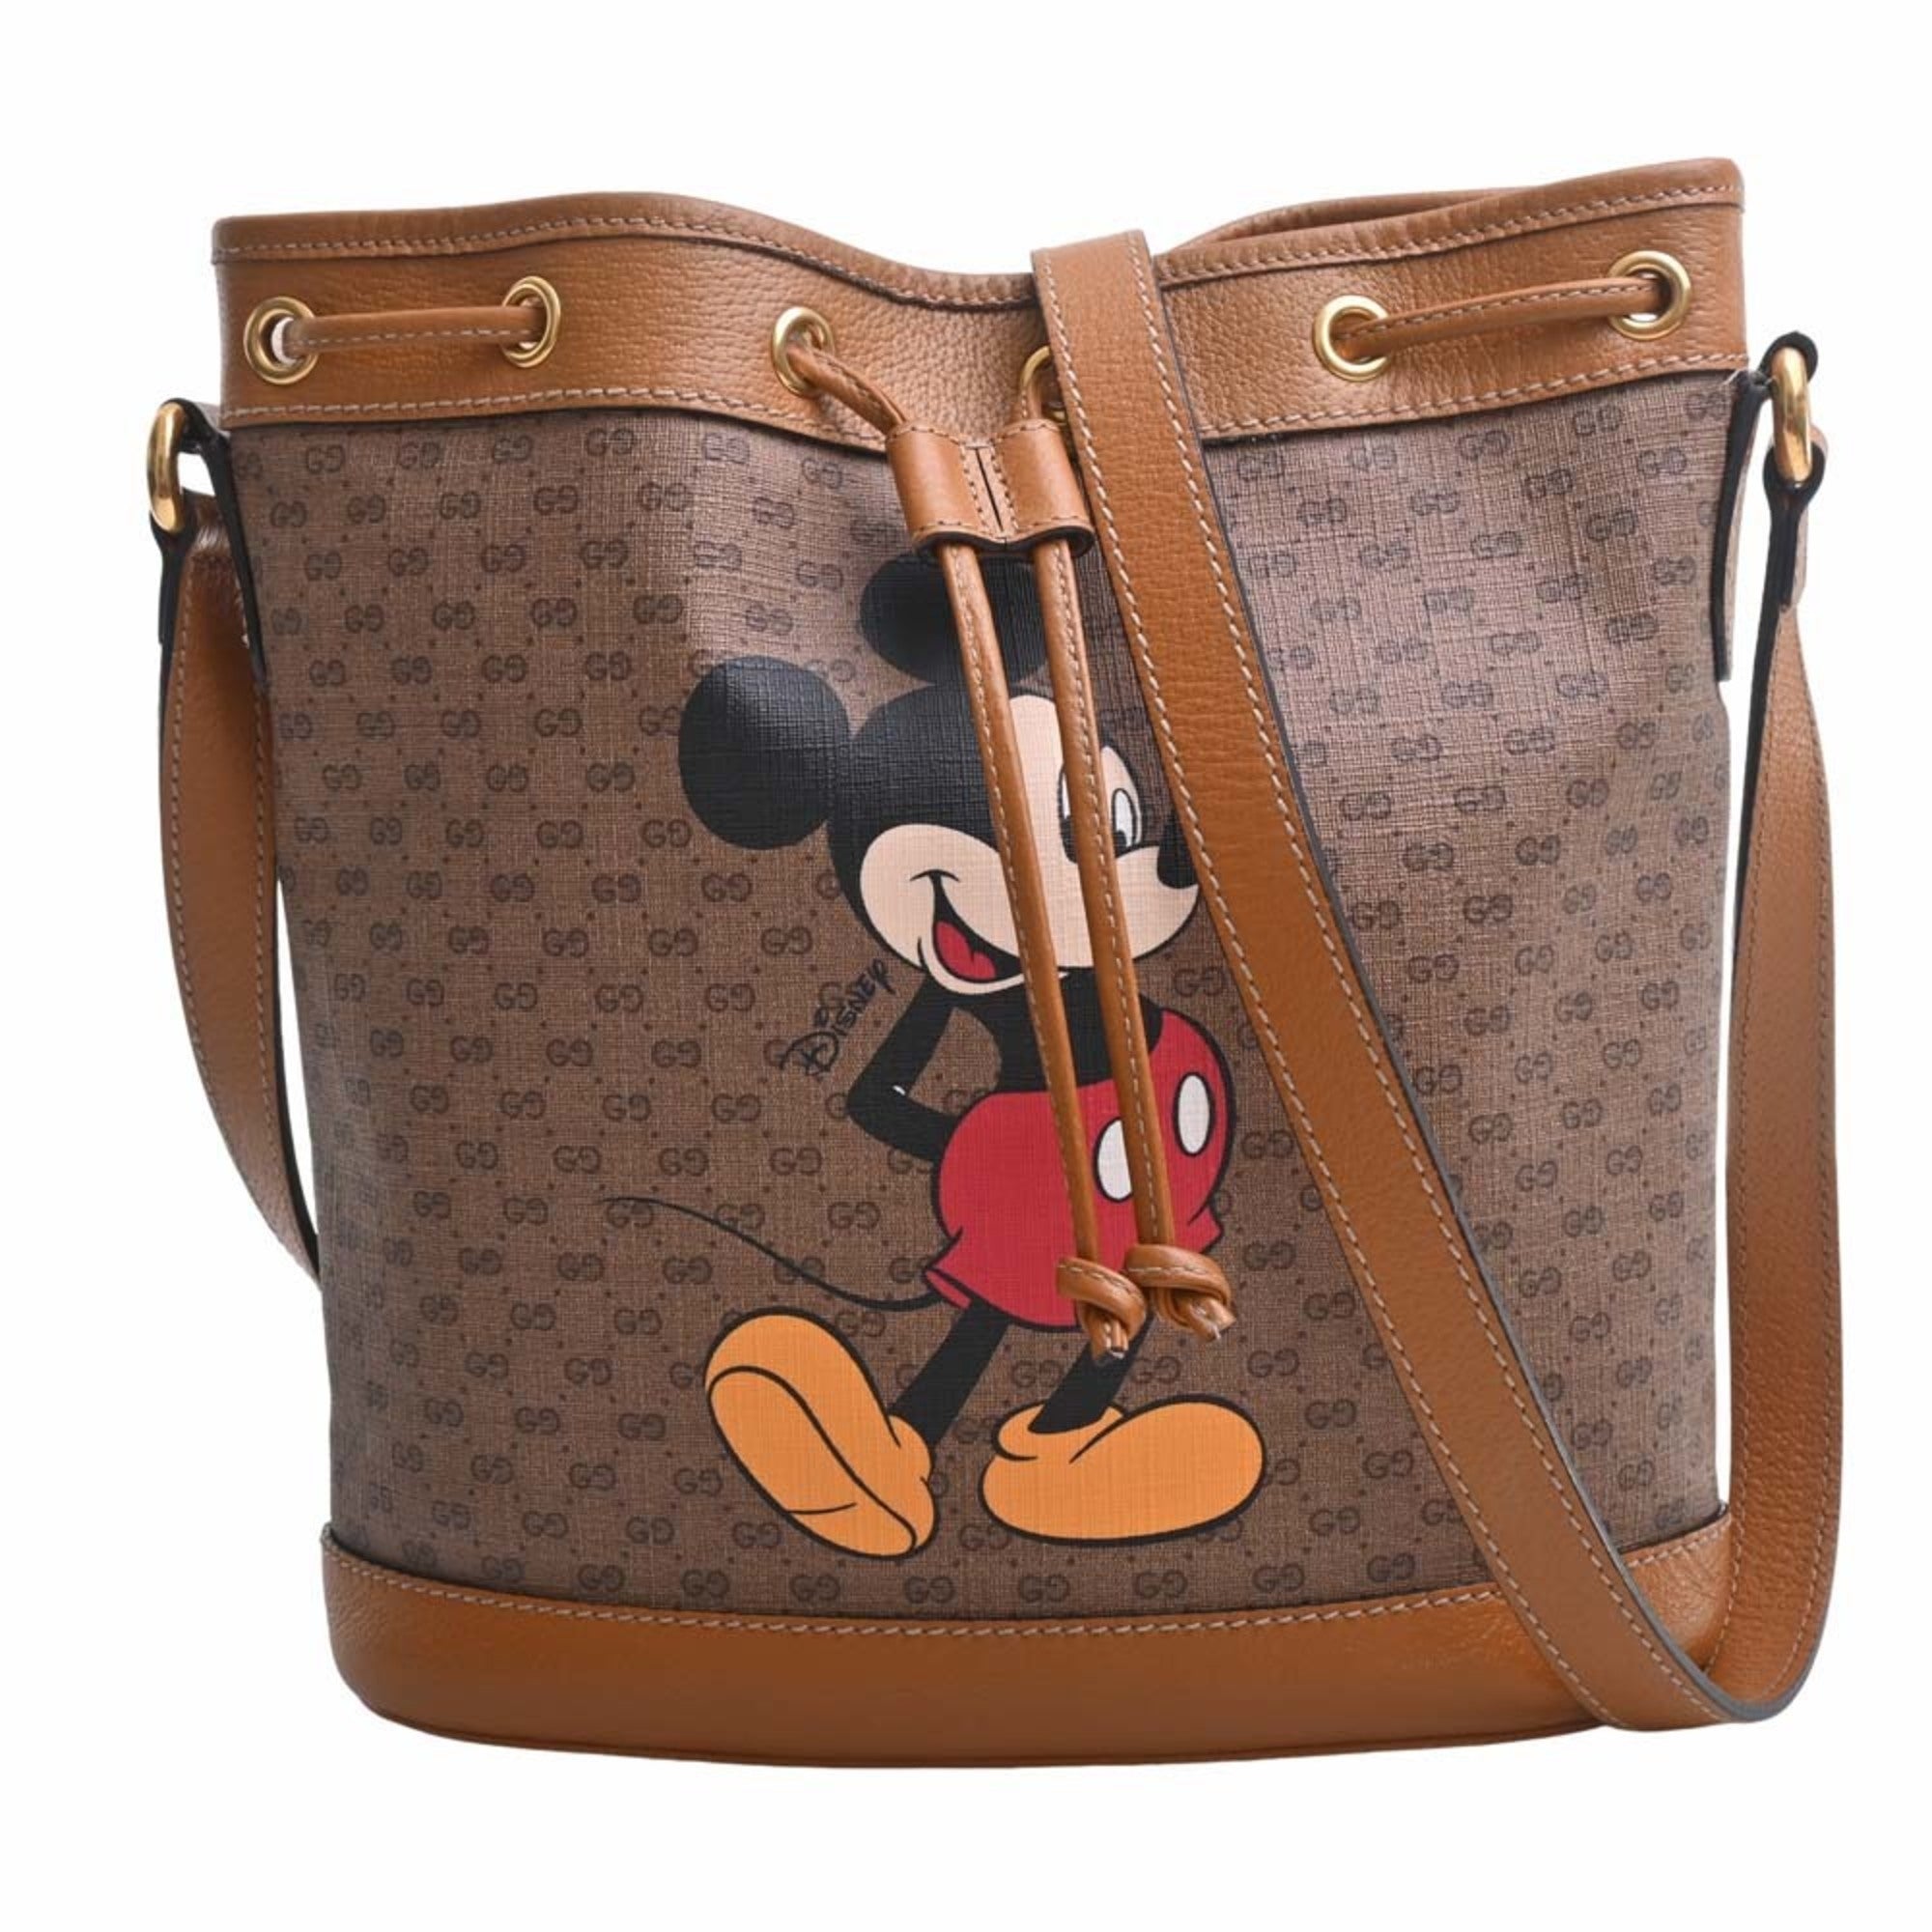 Gucci Mickey Mouse Disney Shoulder Bag | eBay